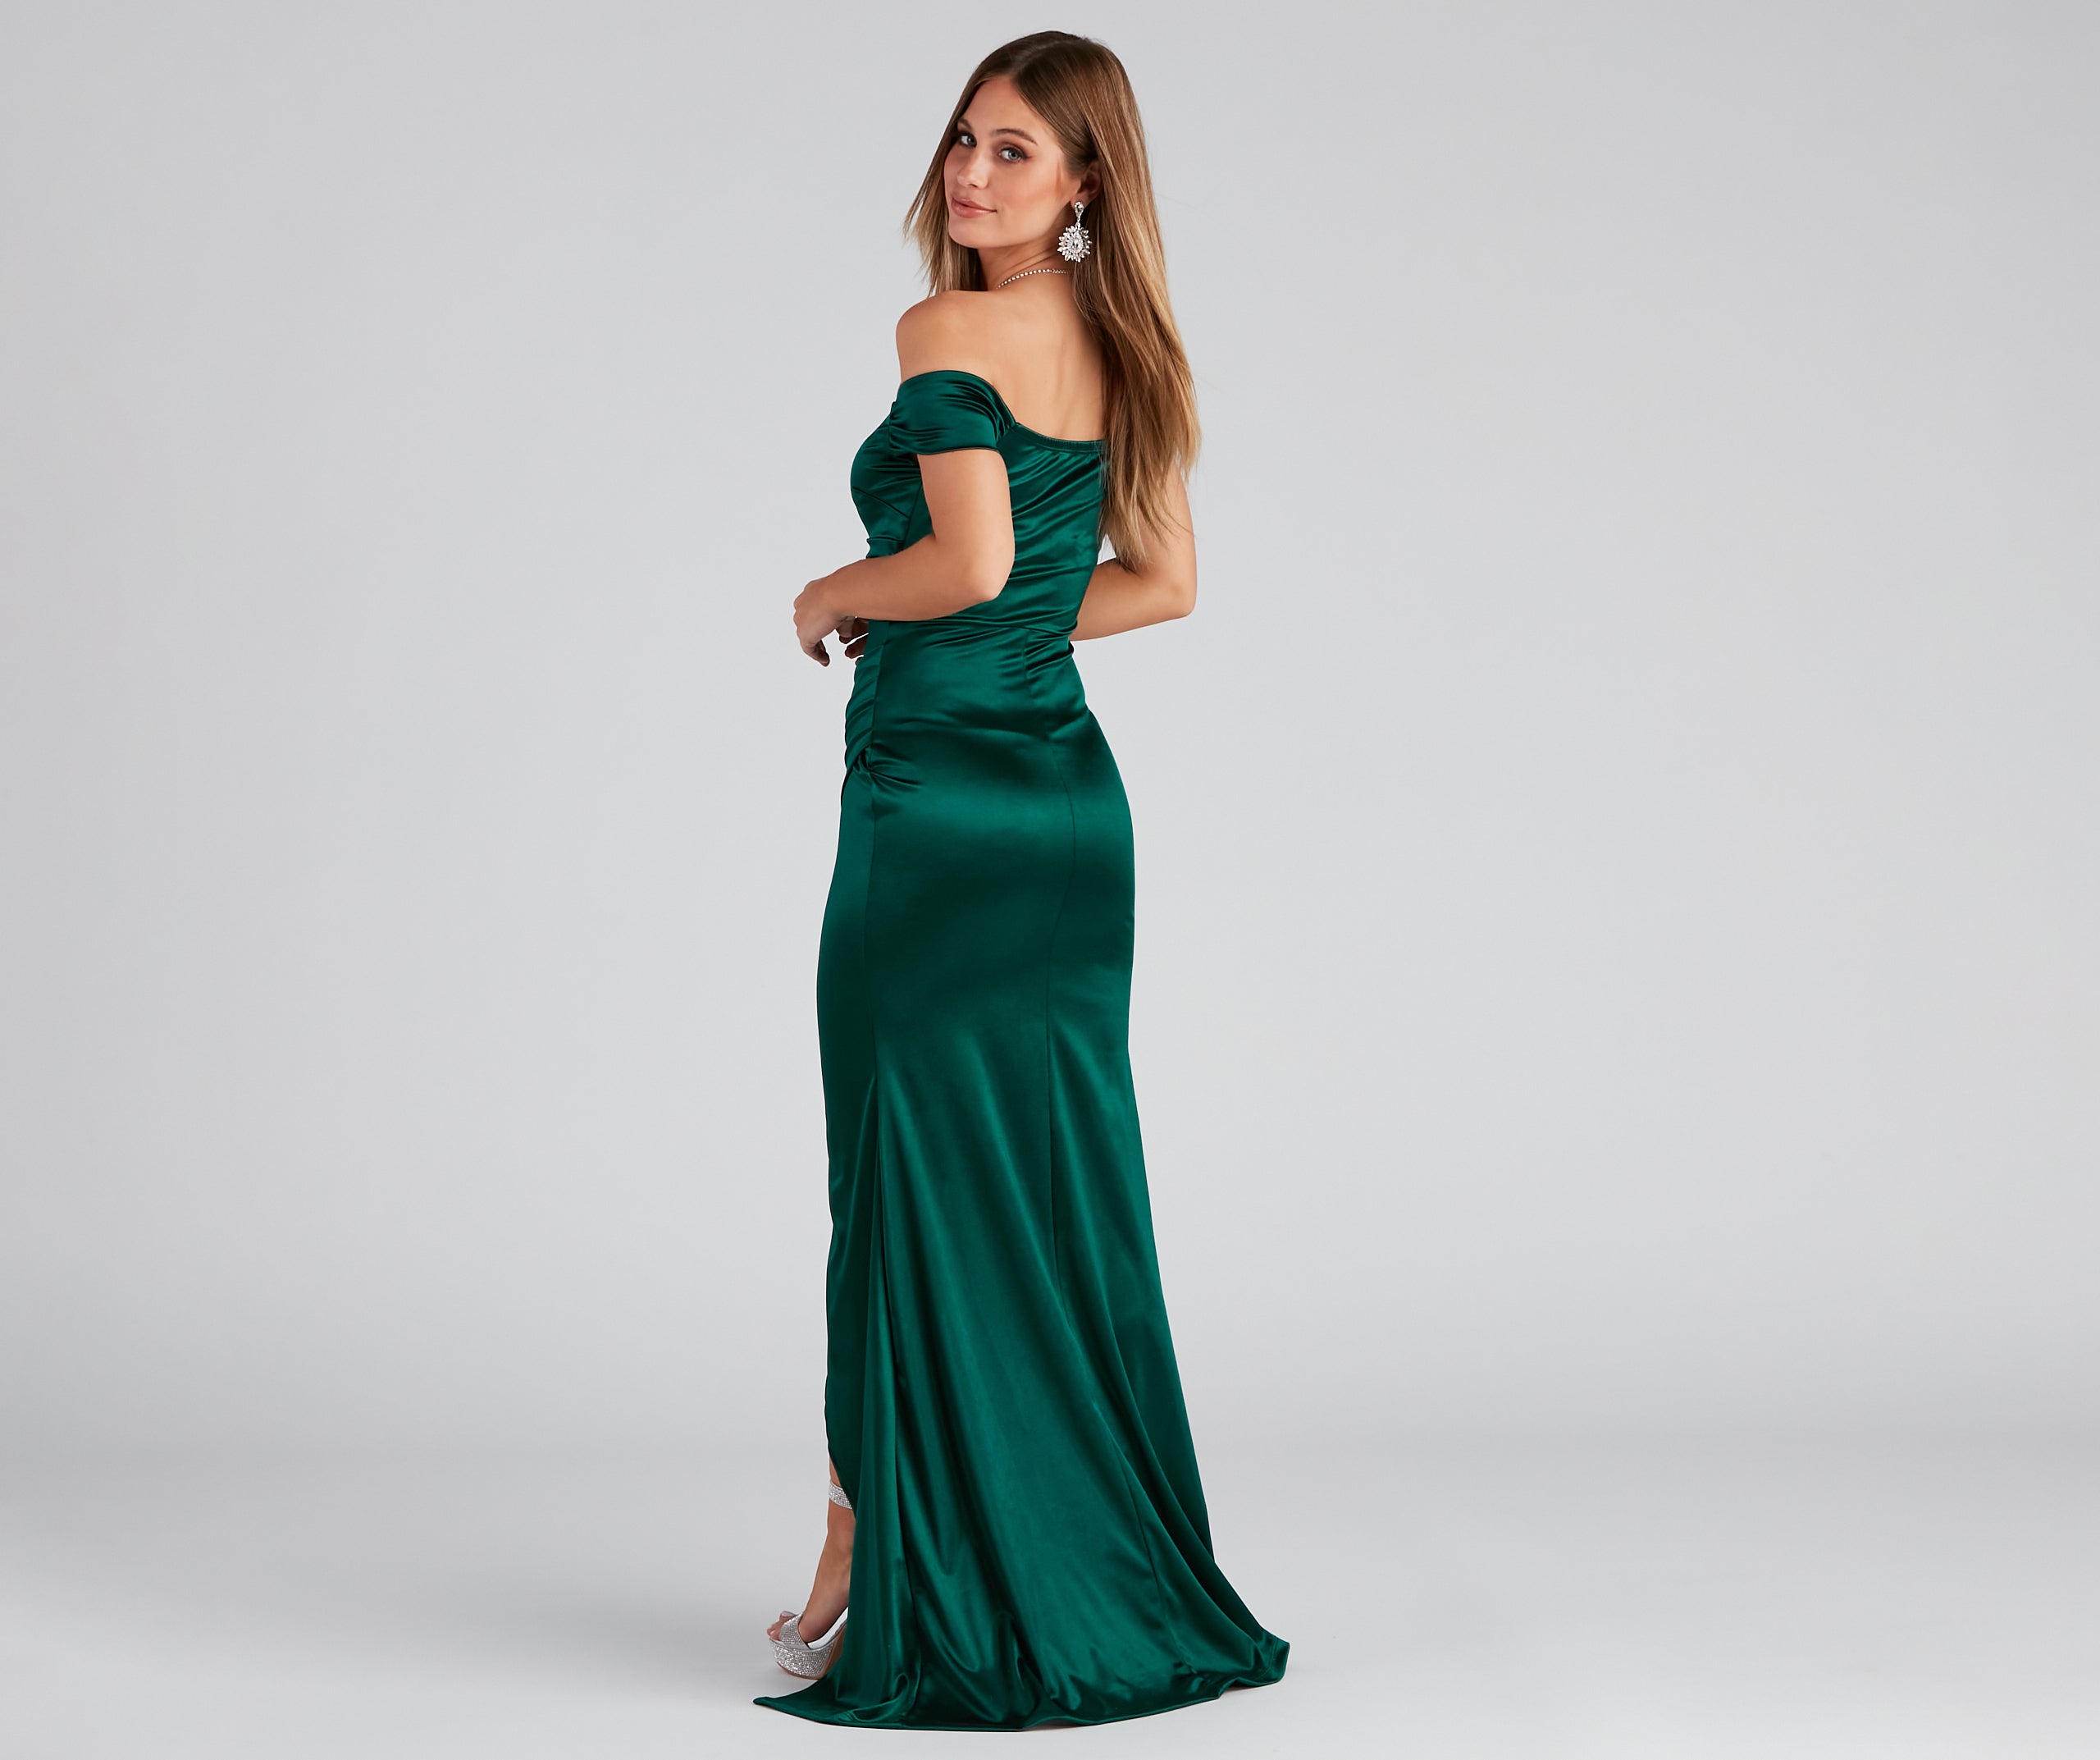 Valencia Formal Off-The-Shoulder Wrap Dress